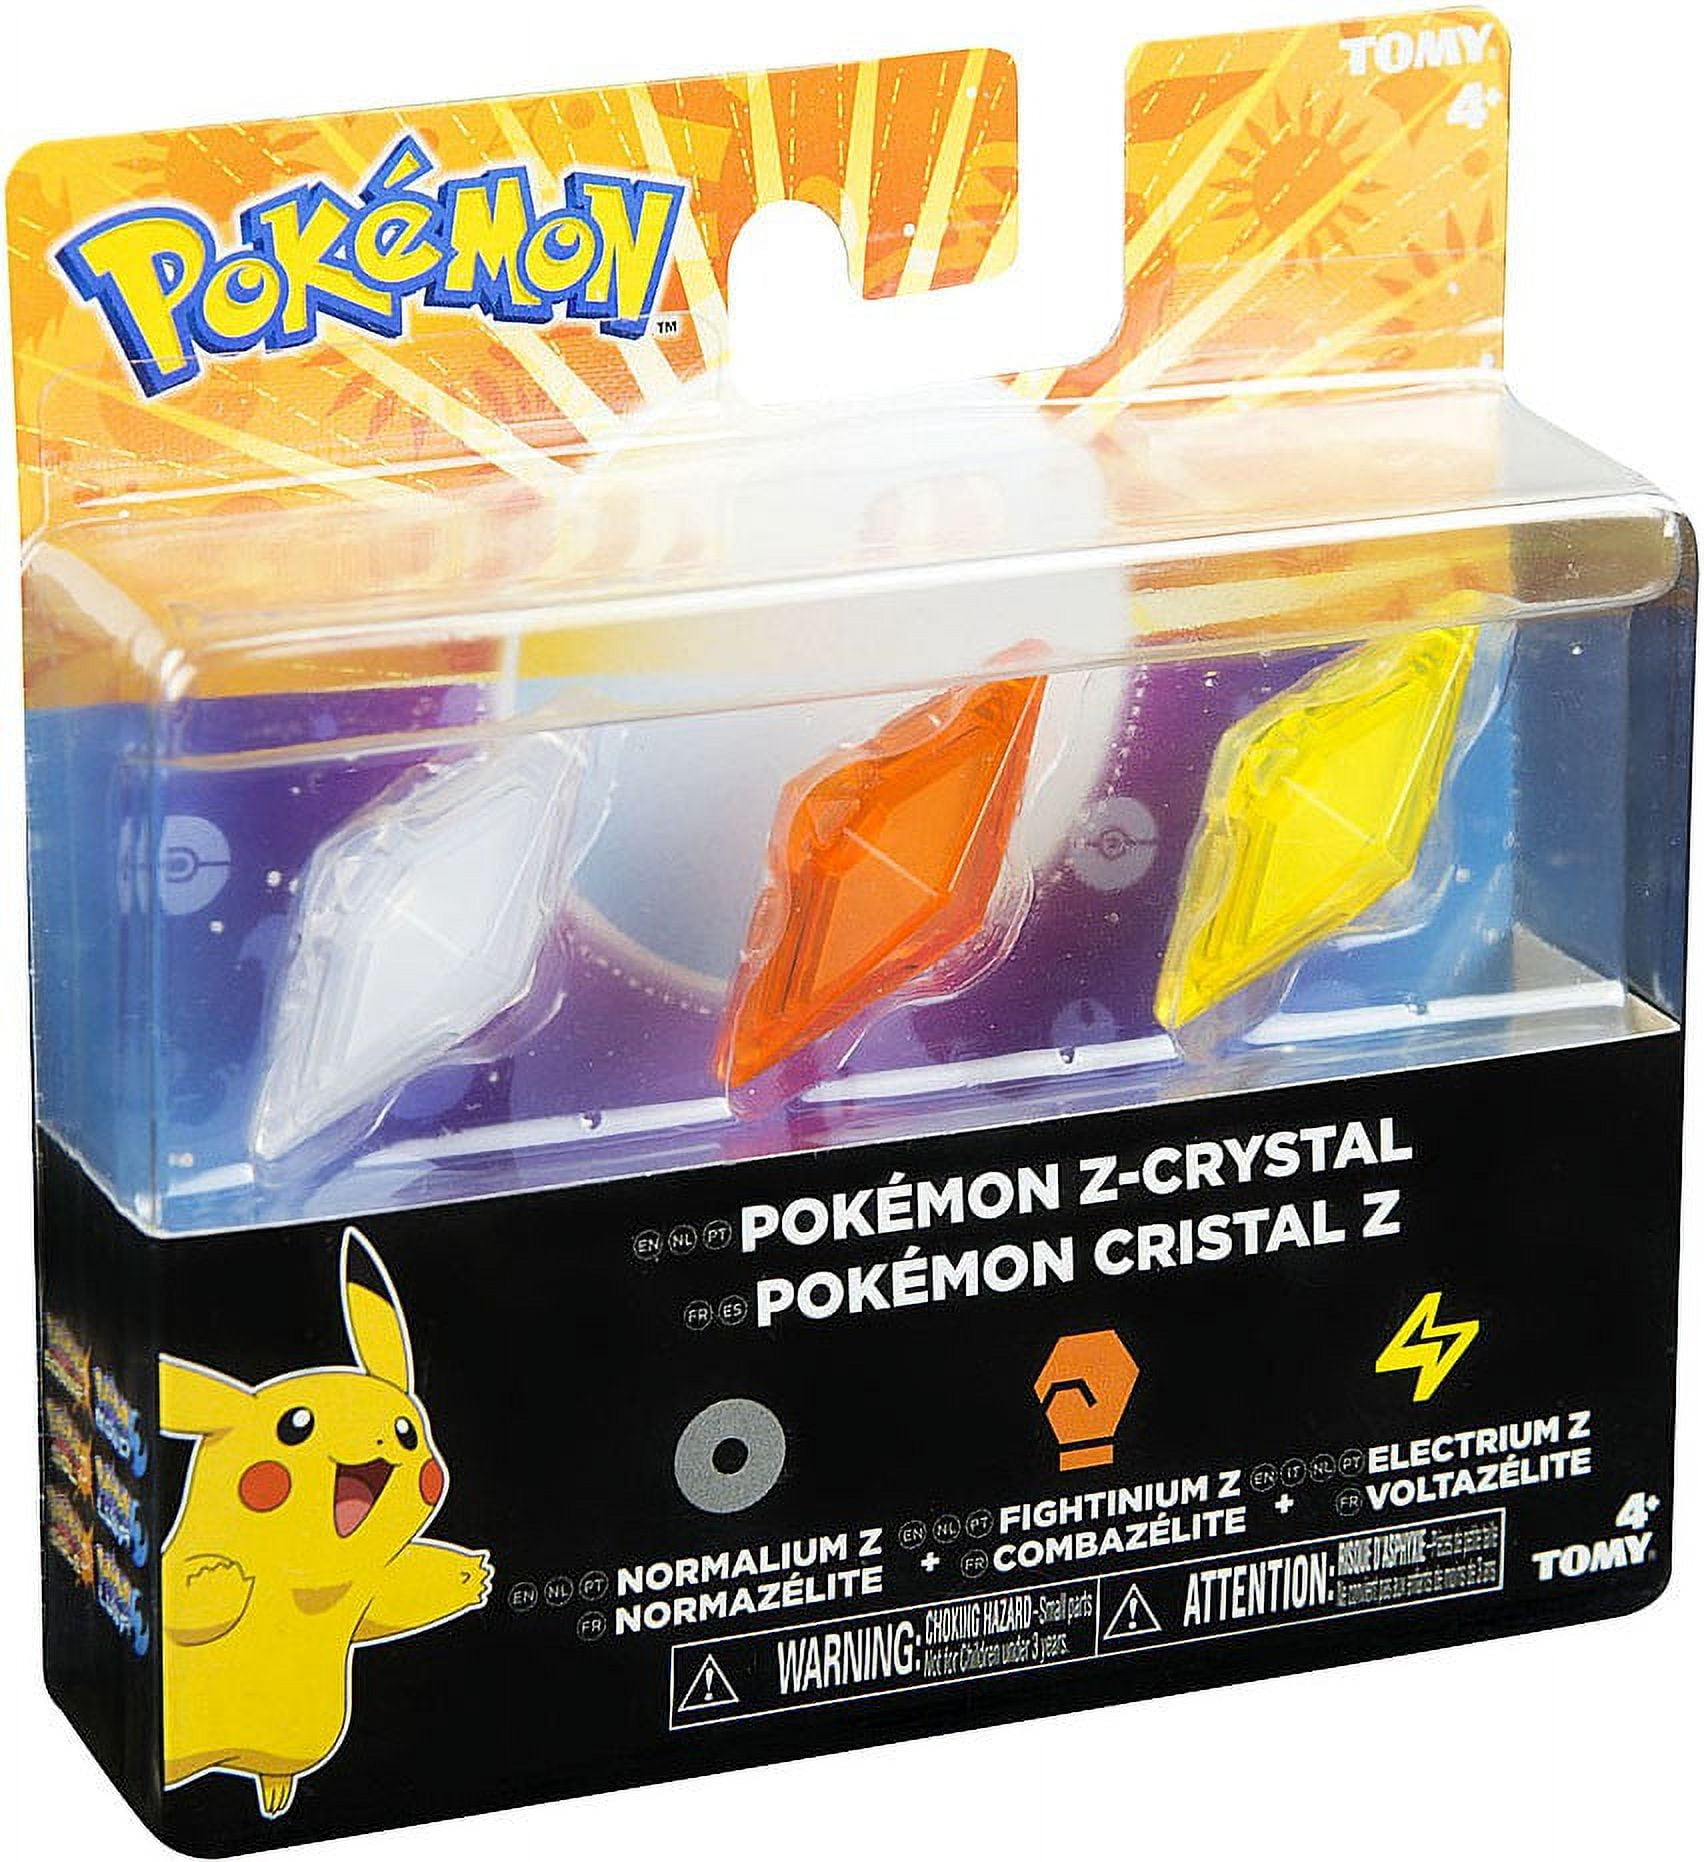 Wrangle Rare Pokémon in Pokémon Crystal